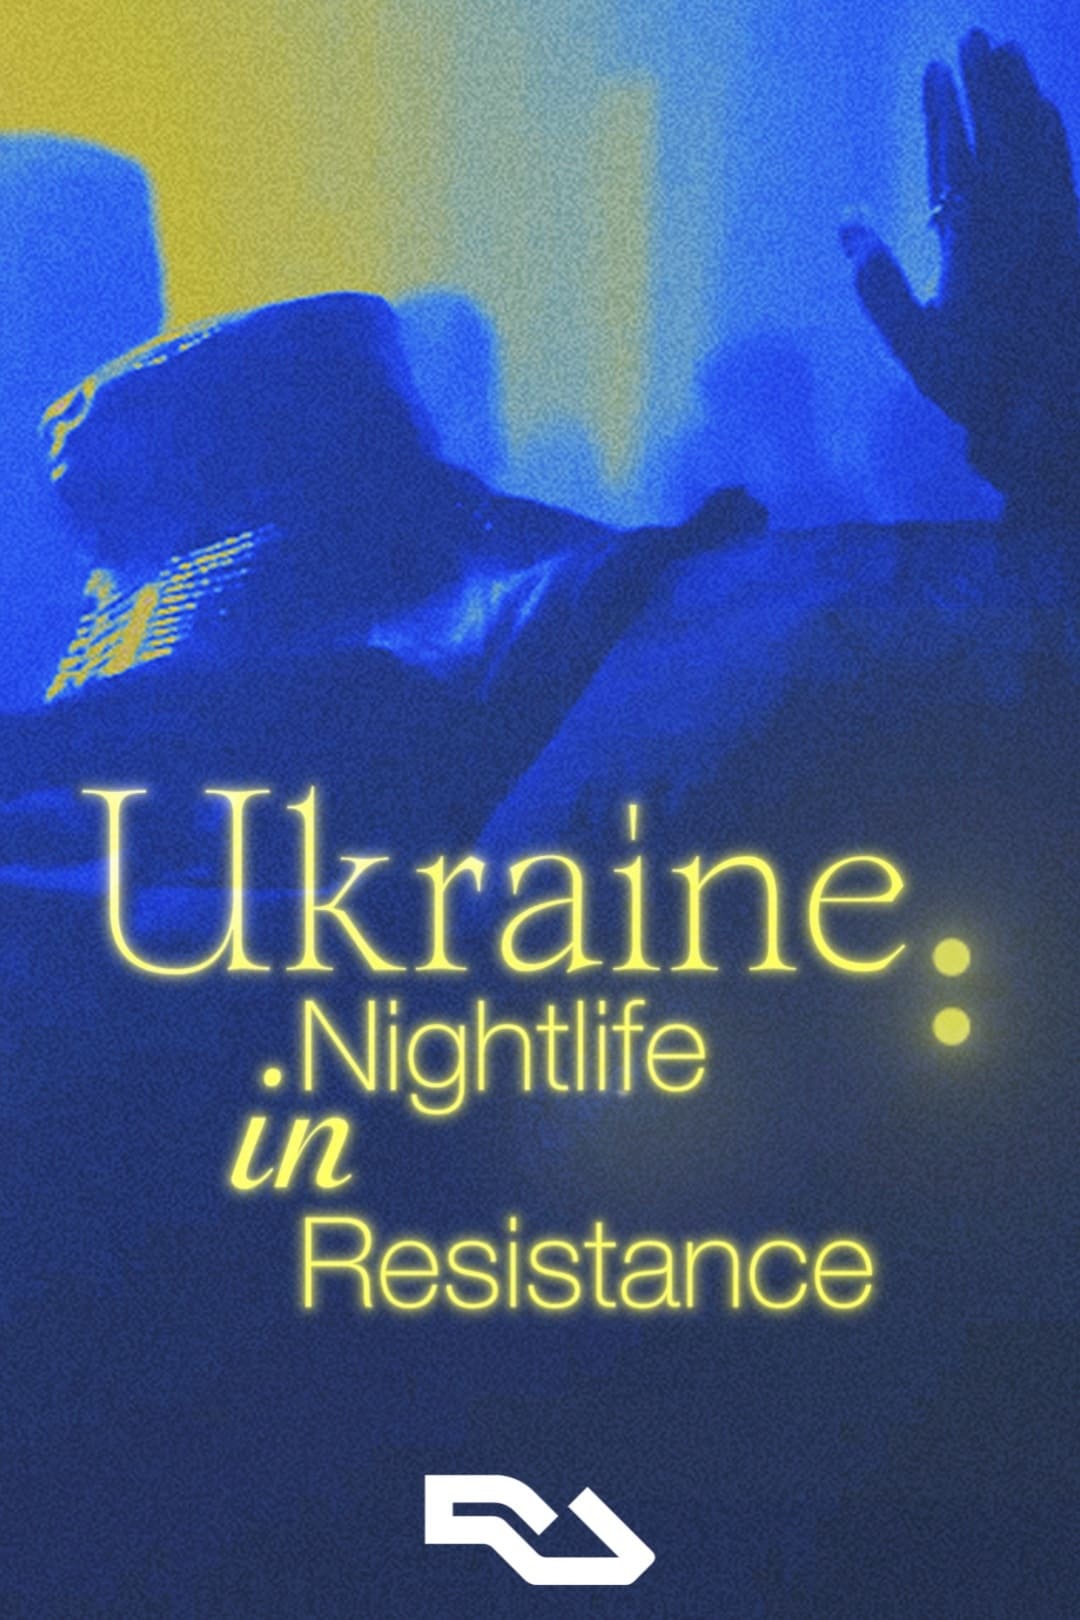 Ukraine: Nightlife in Resistance